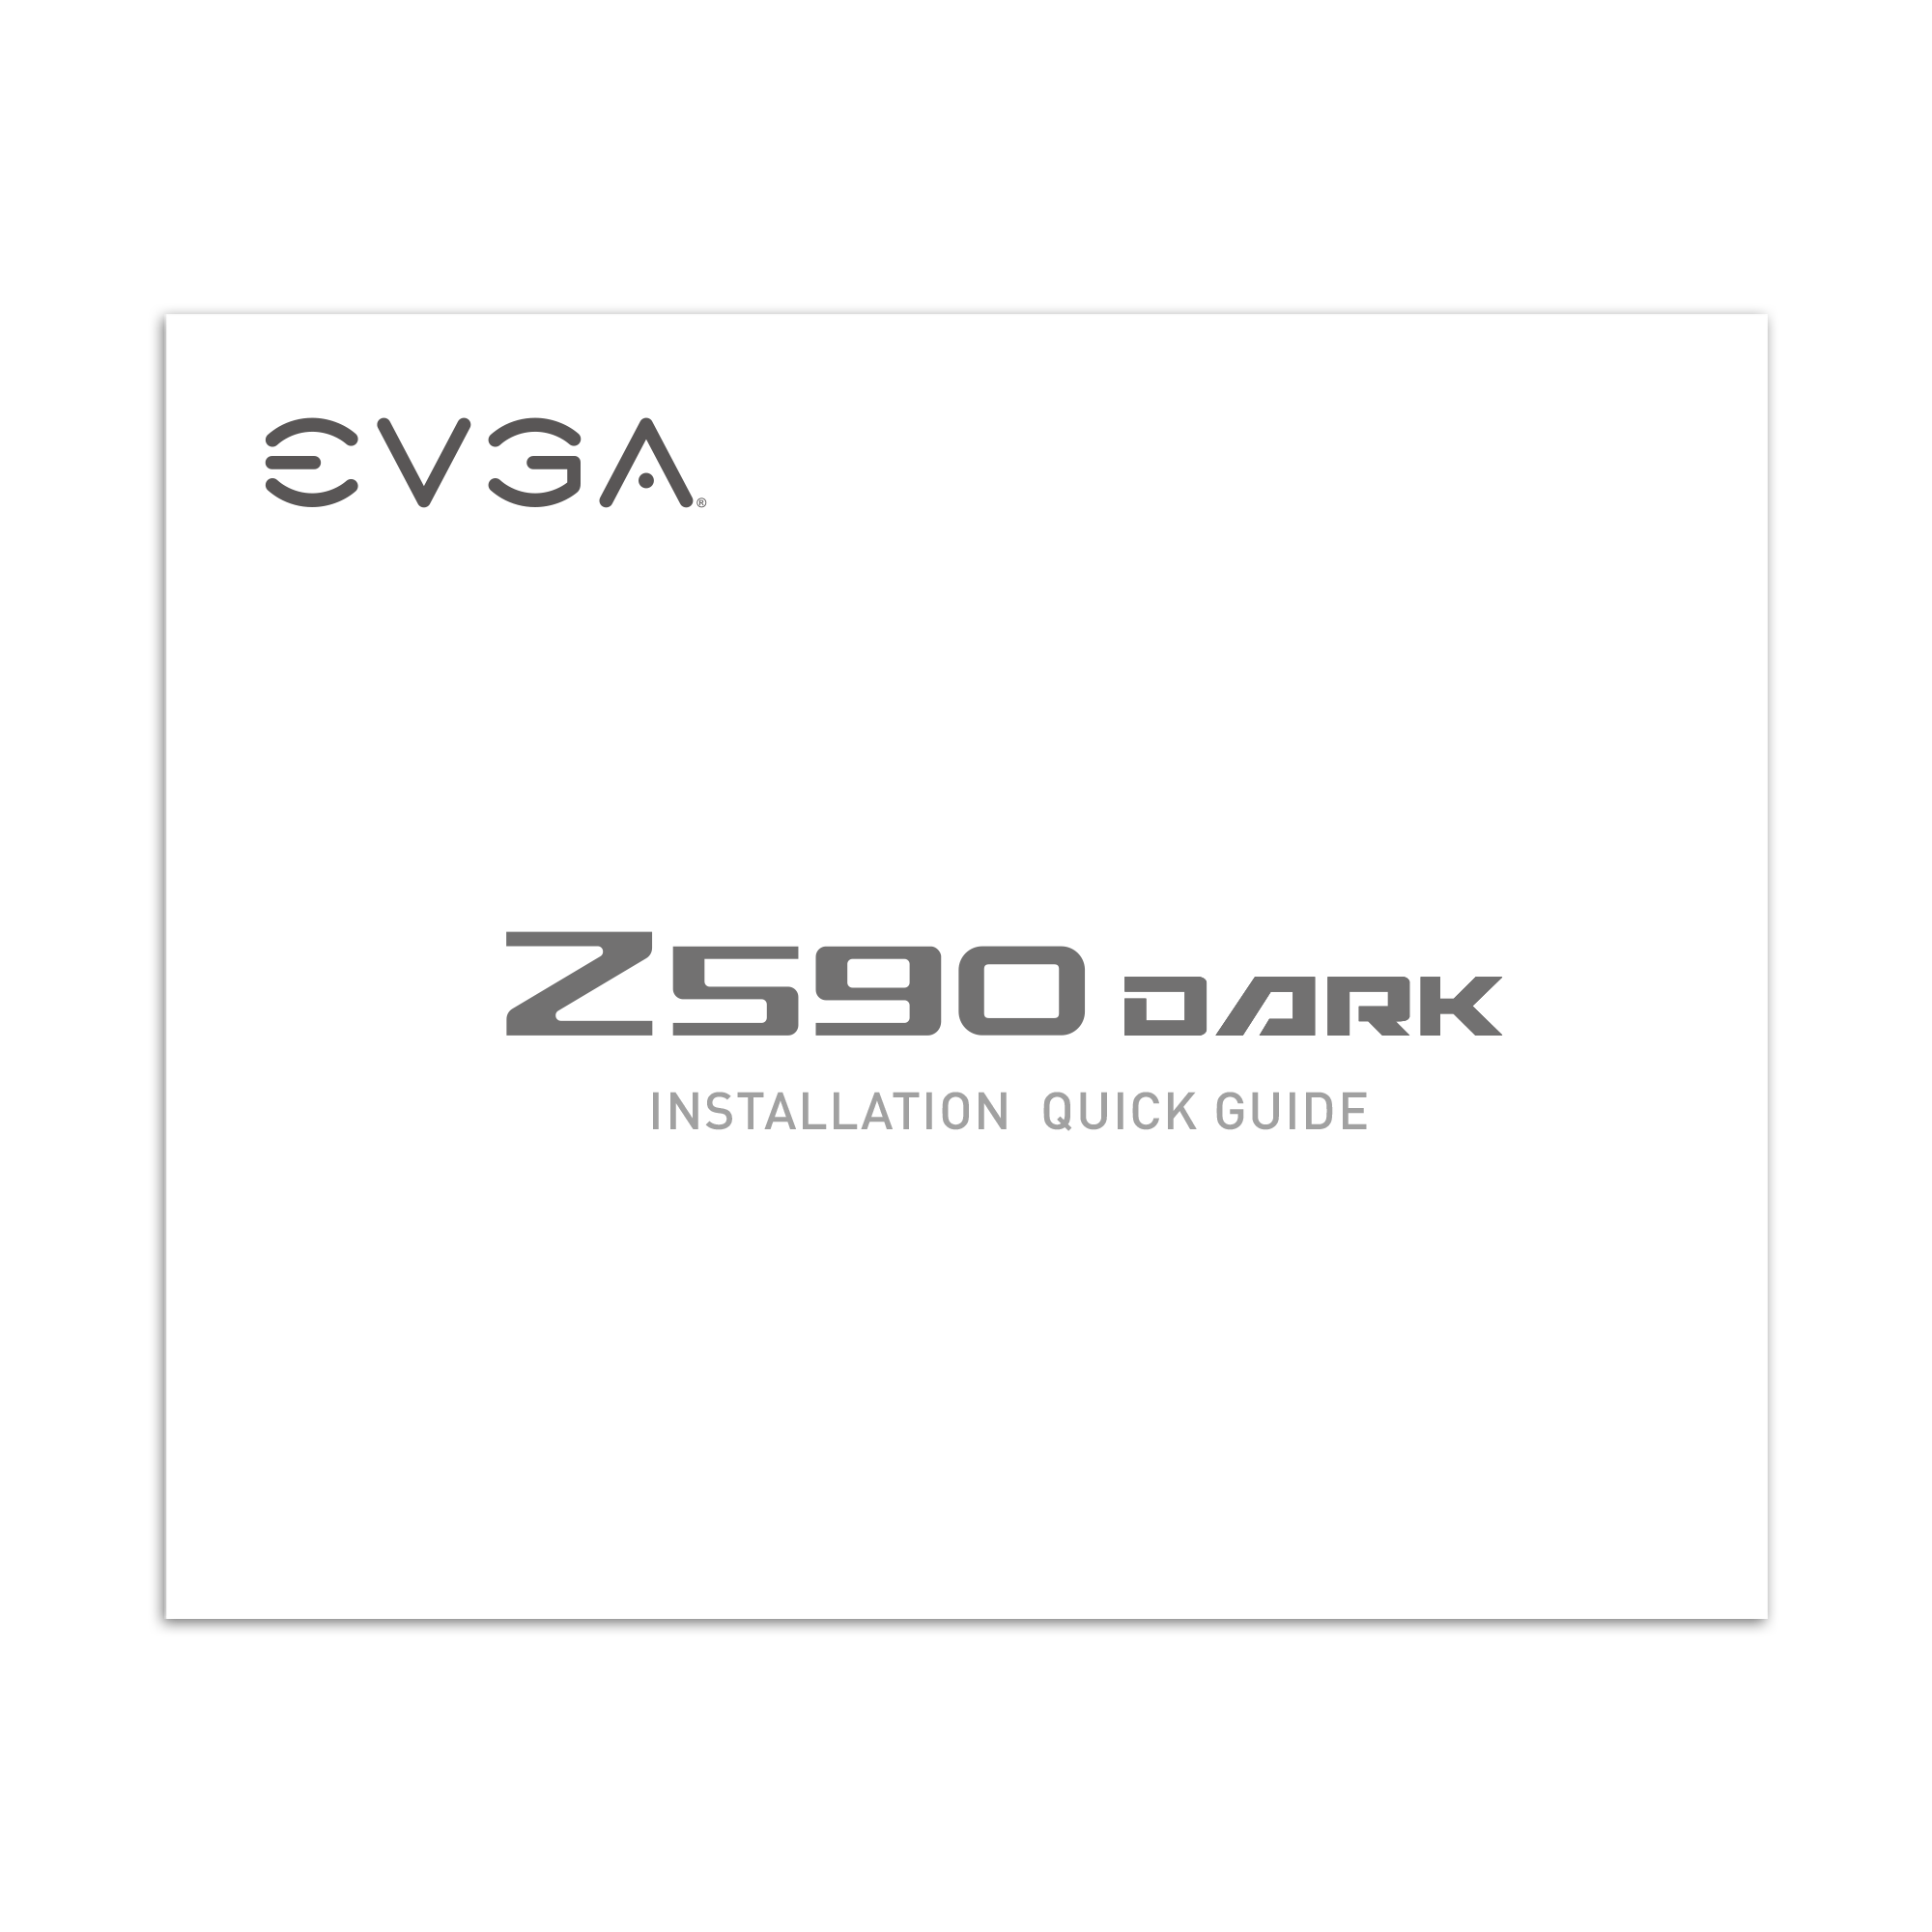 EVGA - EU - Products - EVGA Z590 DARK, 121-RL-E599-KR, LGA 1200